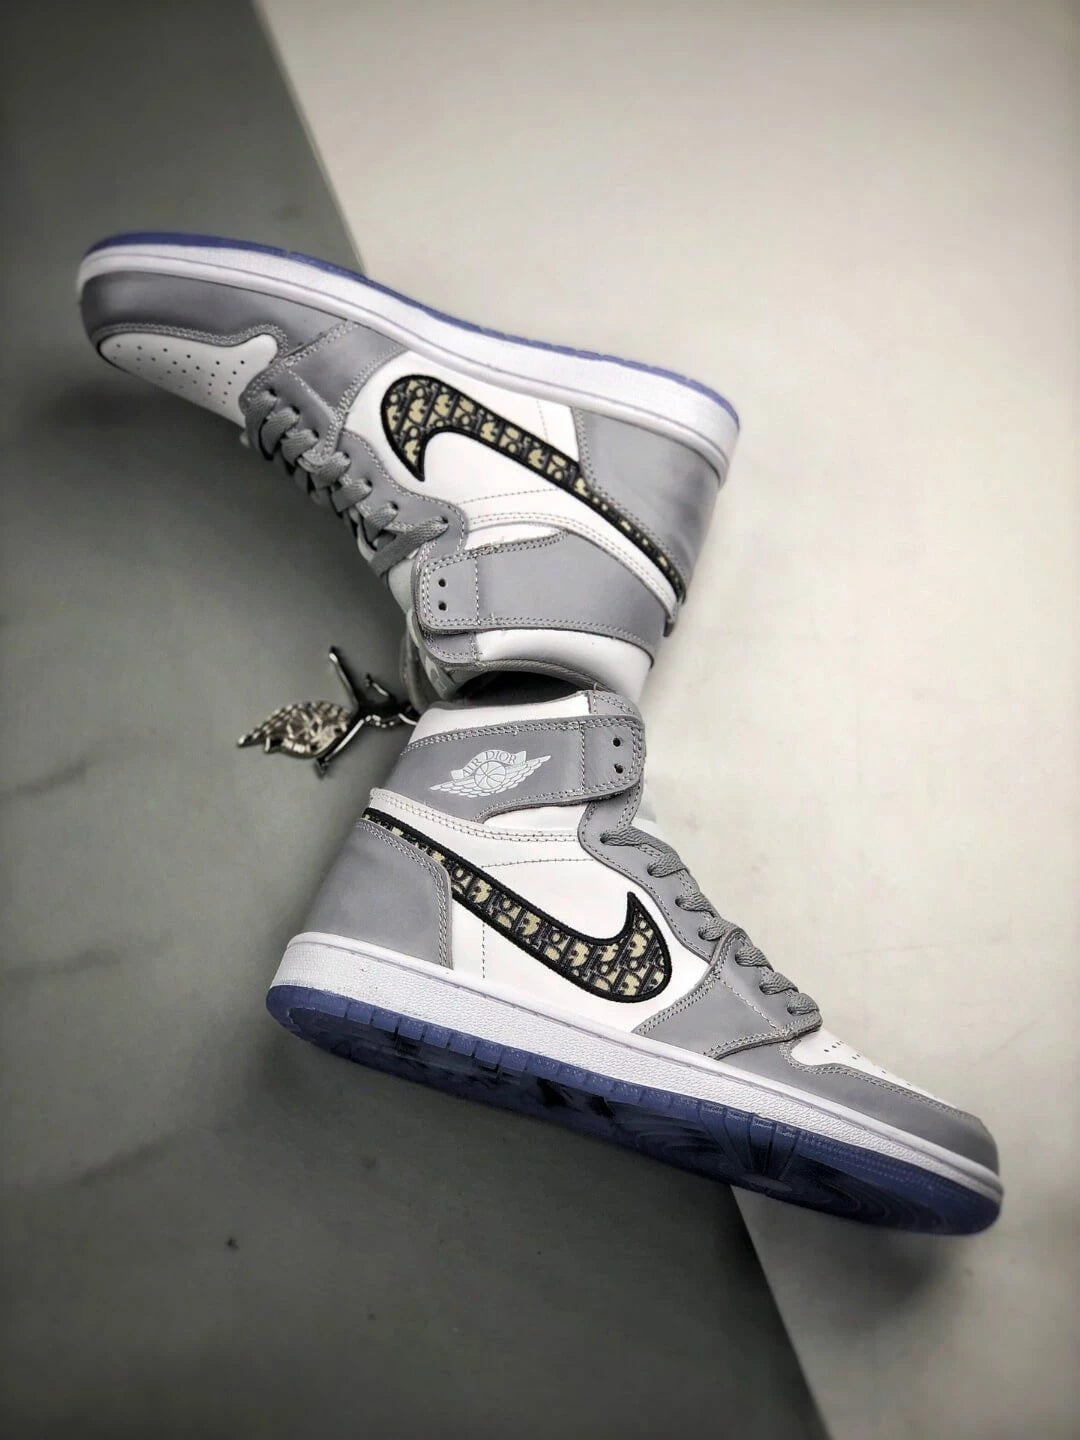 Dior X Air Jordan 1 Shoes for Unisex (Grey/White)